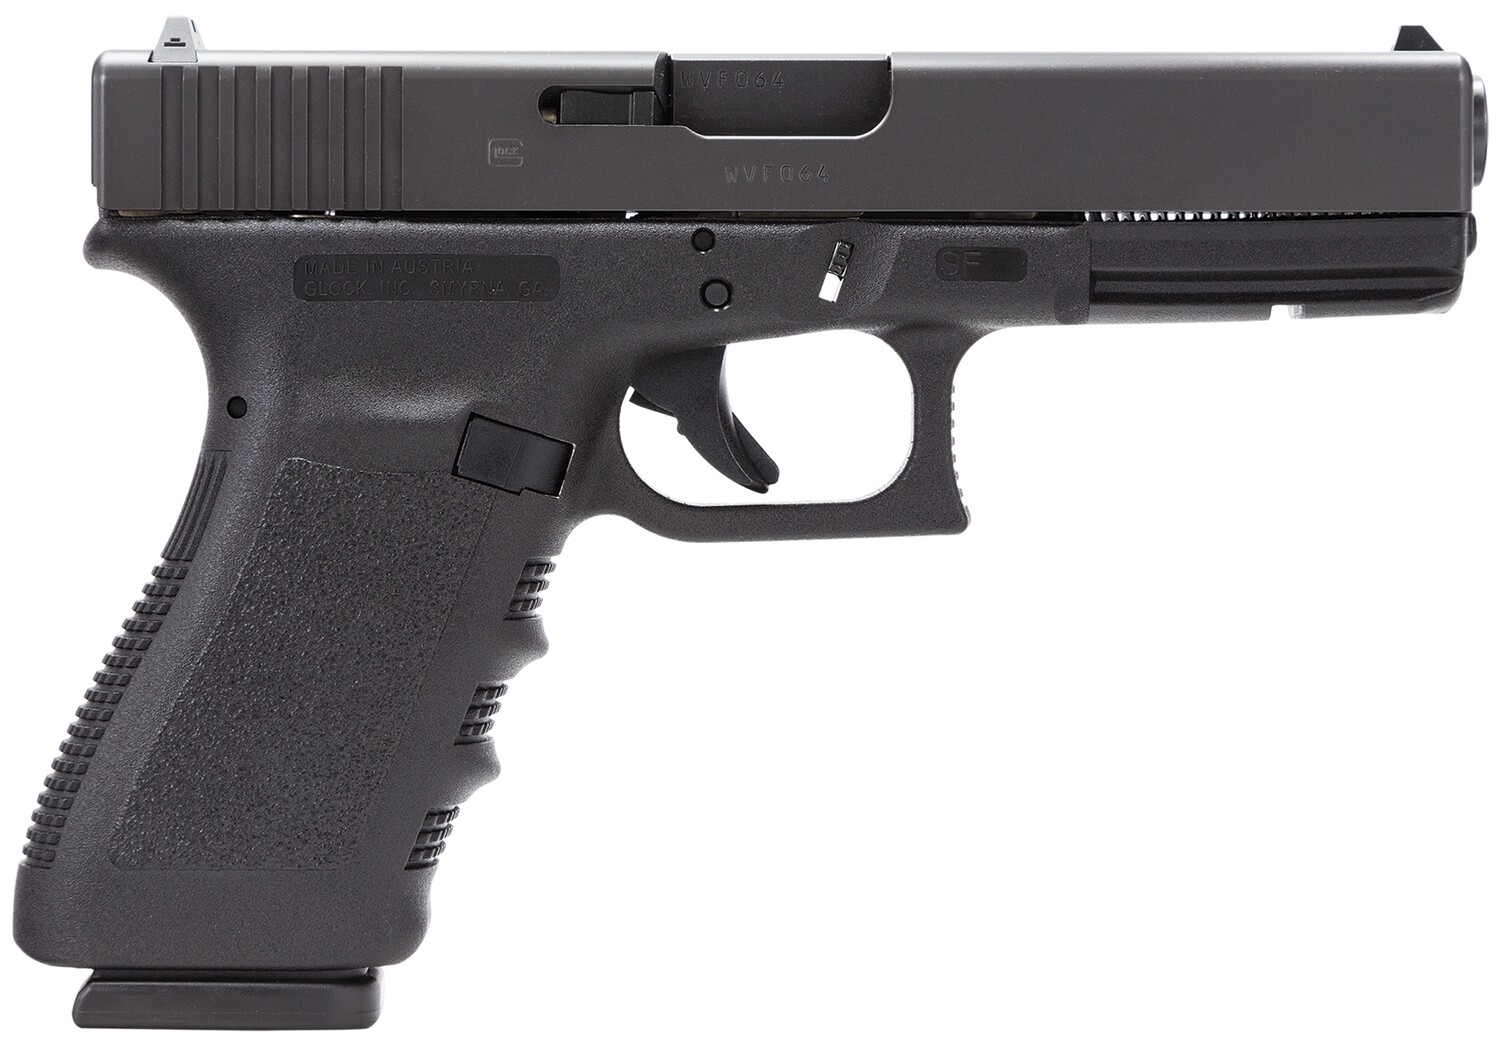 Glock OEM G21SF Black 80% Pistol Pats Pack Gen3 45 ACP - Fits: Polymer80 PF45 Frame Large